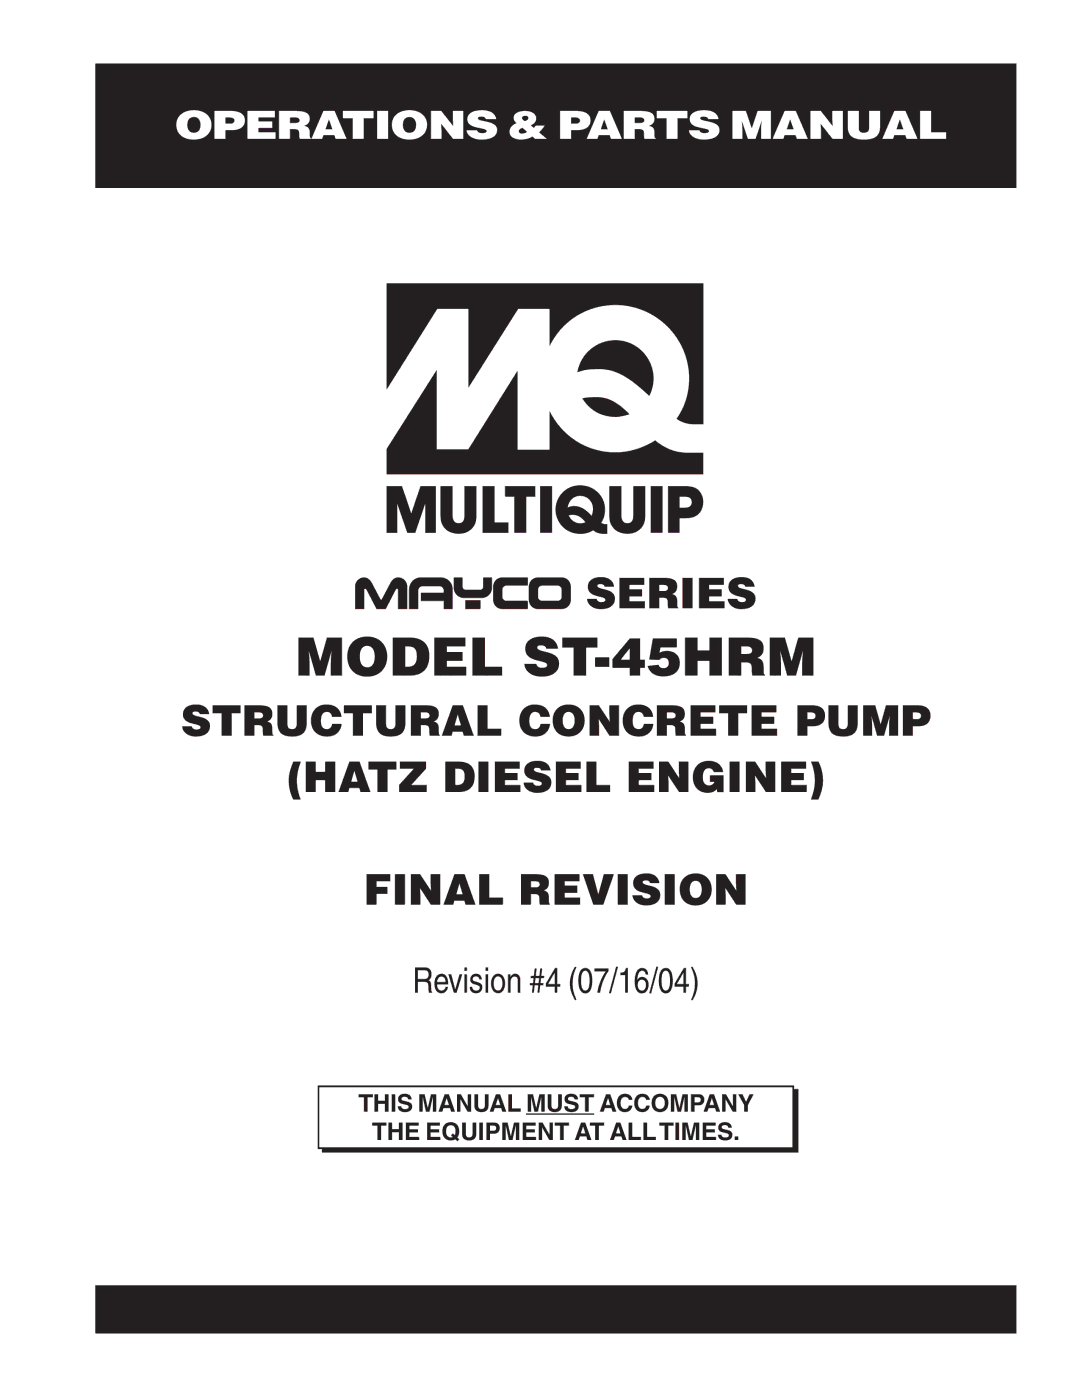 Multiquip manual Model ST-45HRM 